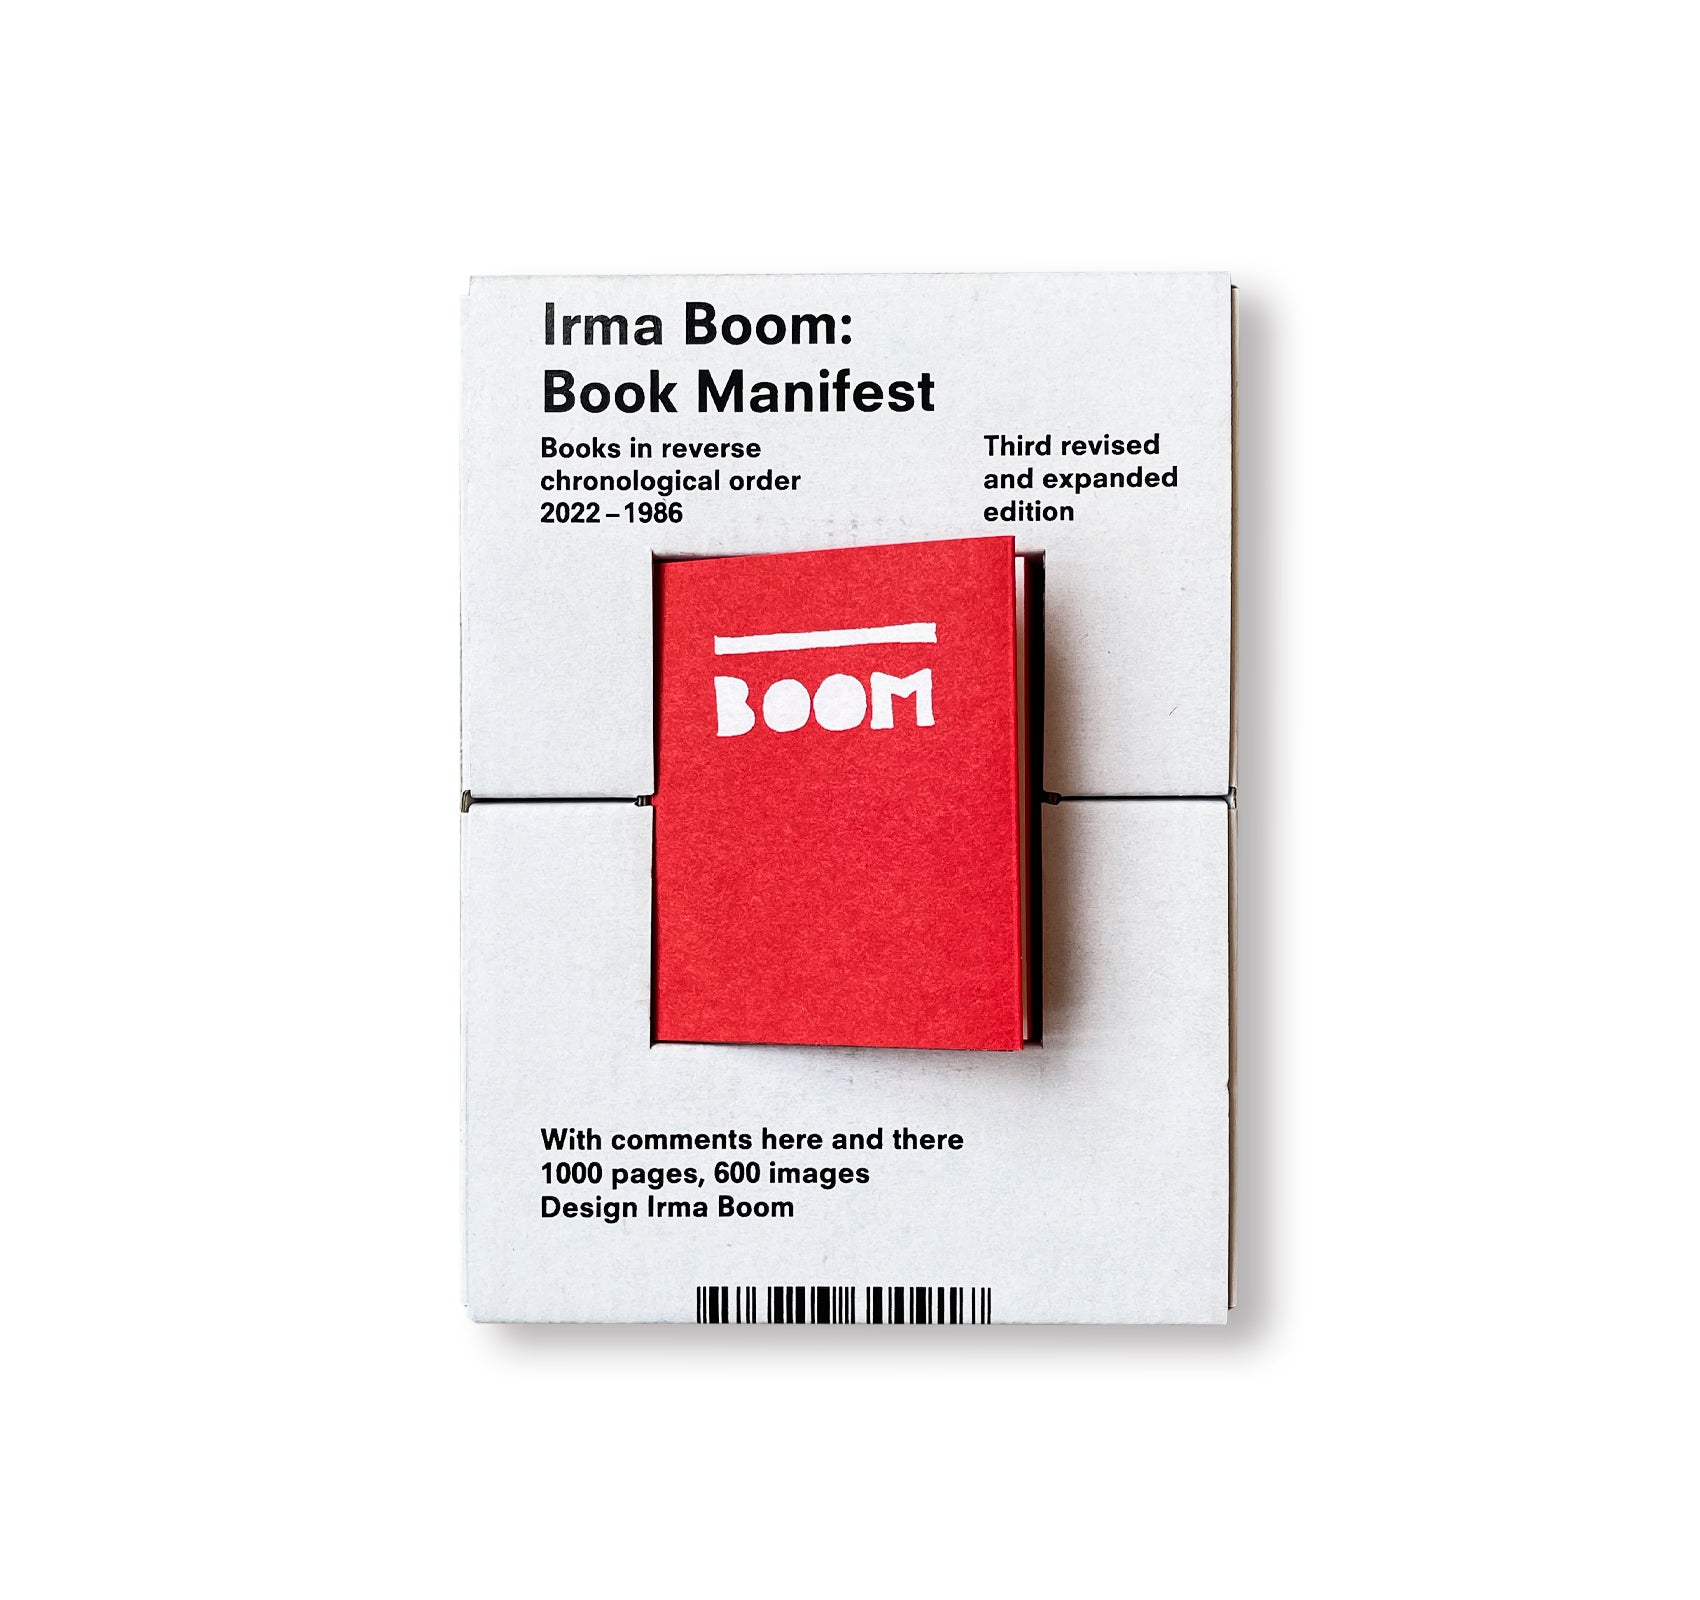 BOOK MANIFEST by Irma Boom